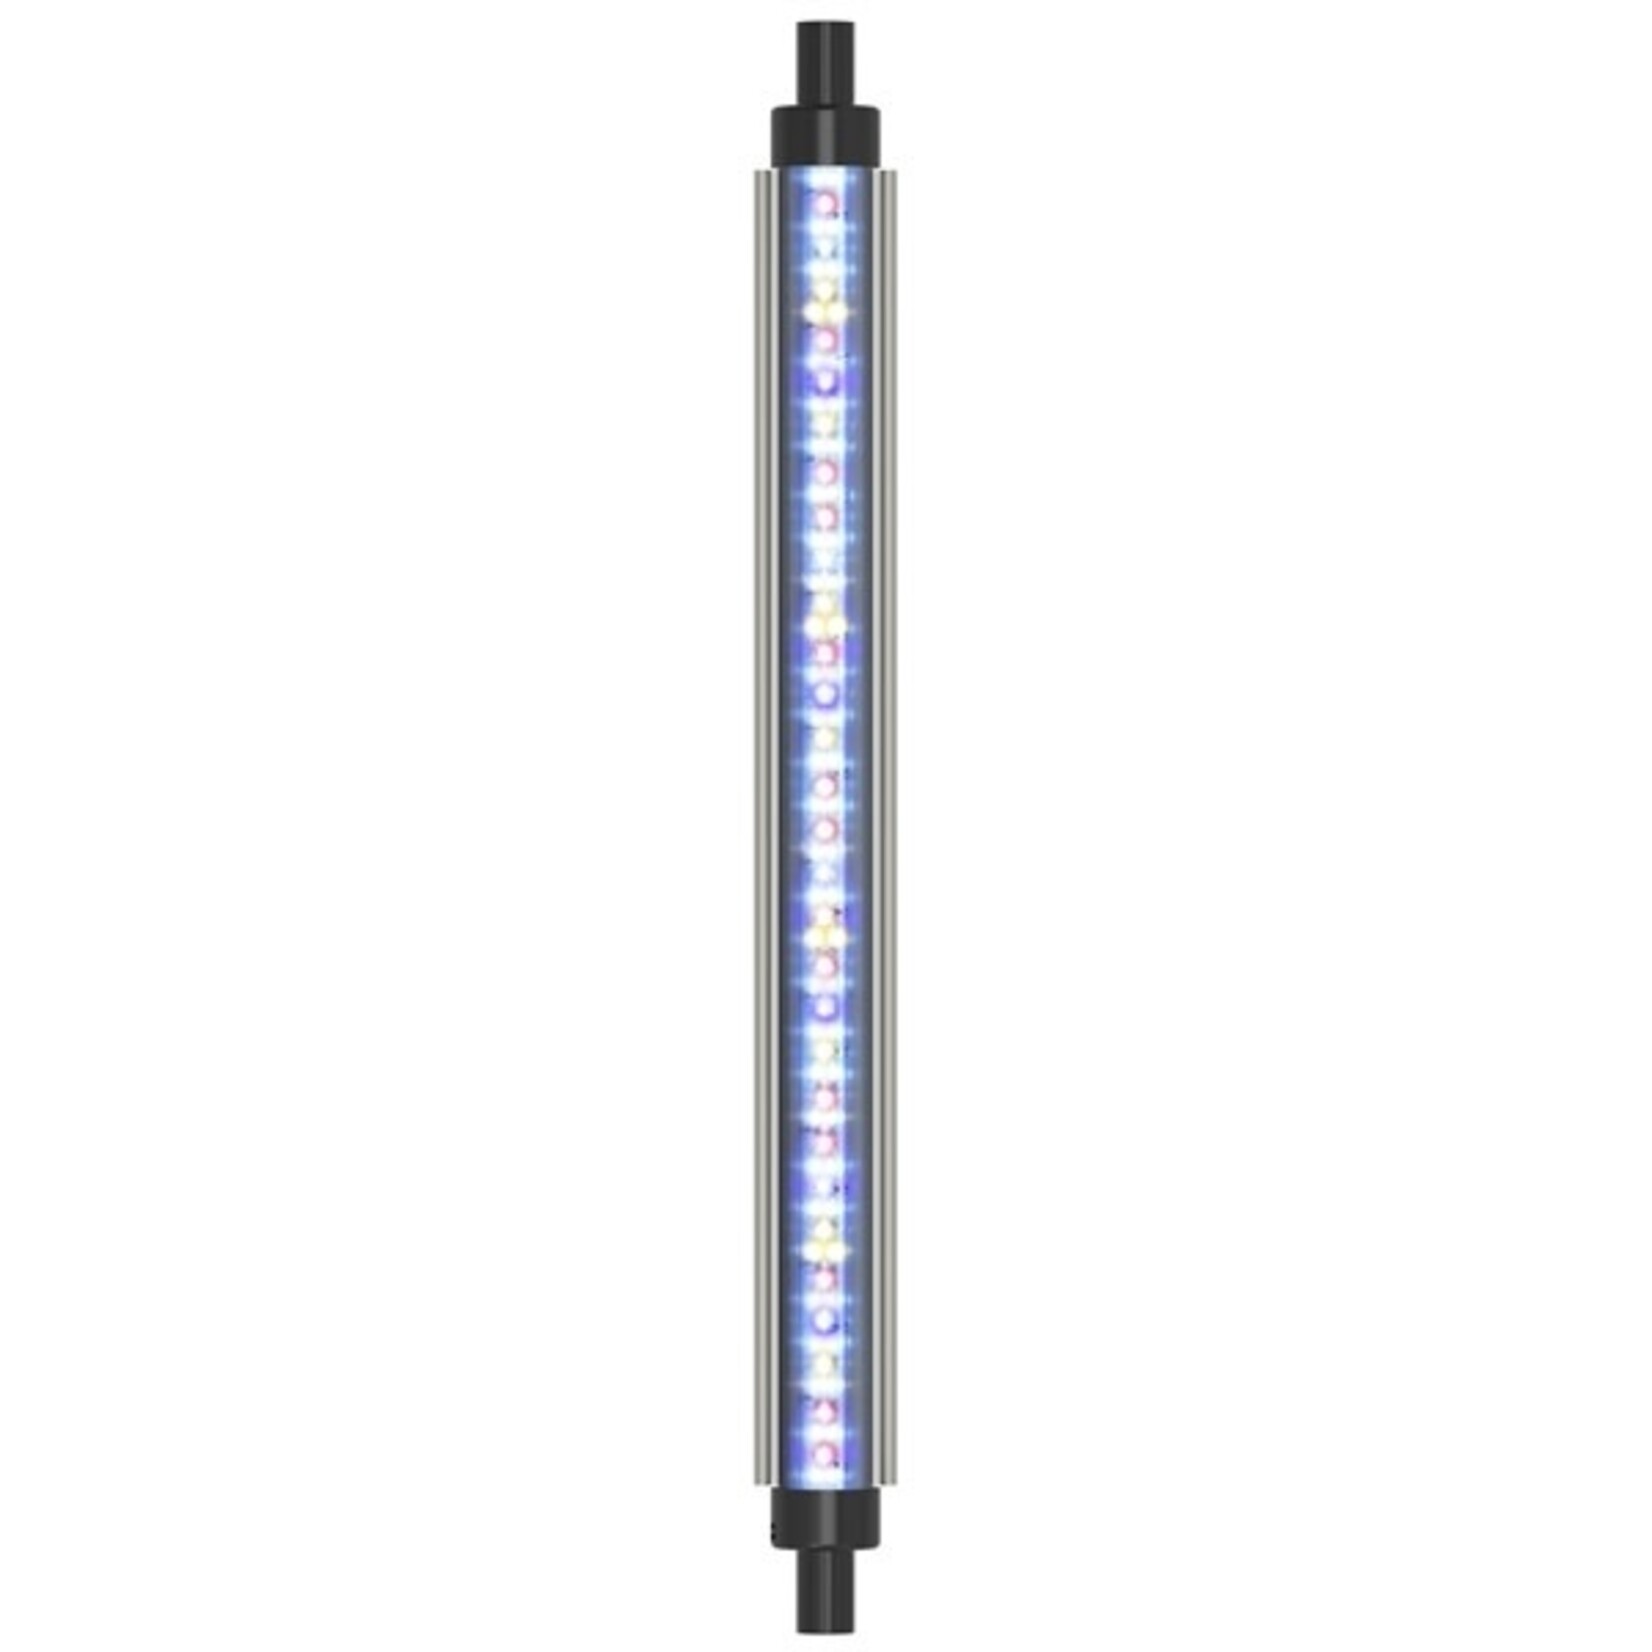 Aquatlantis Easy LED tube 438 mm 12v-1.5a